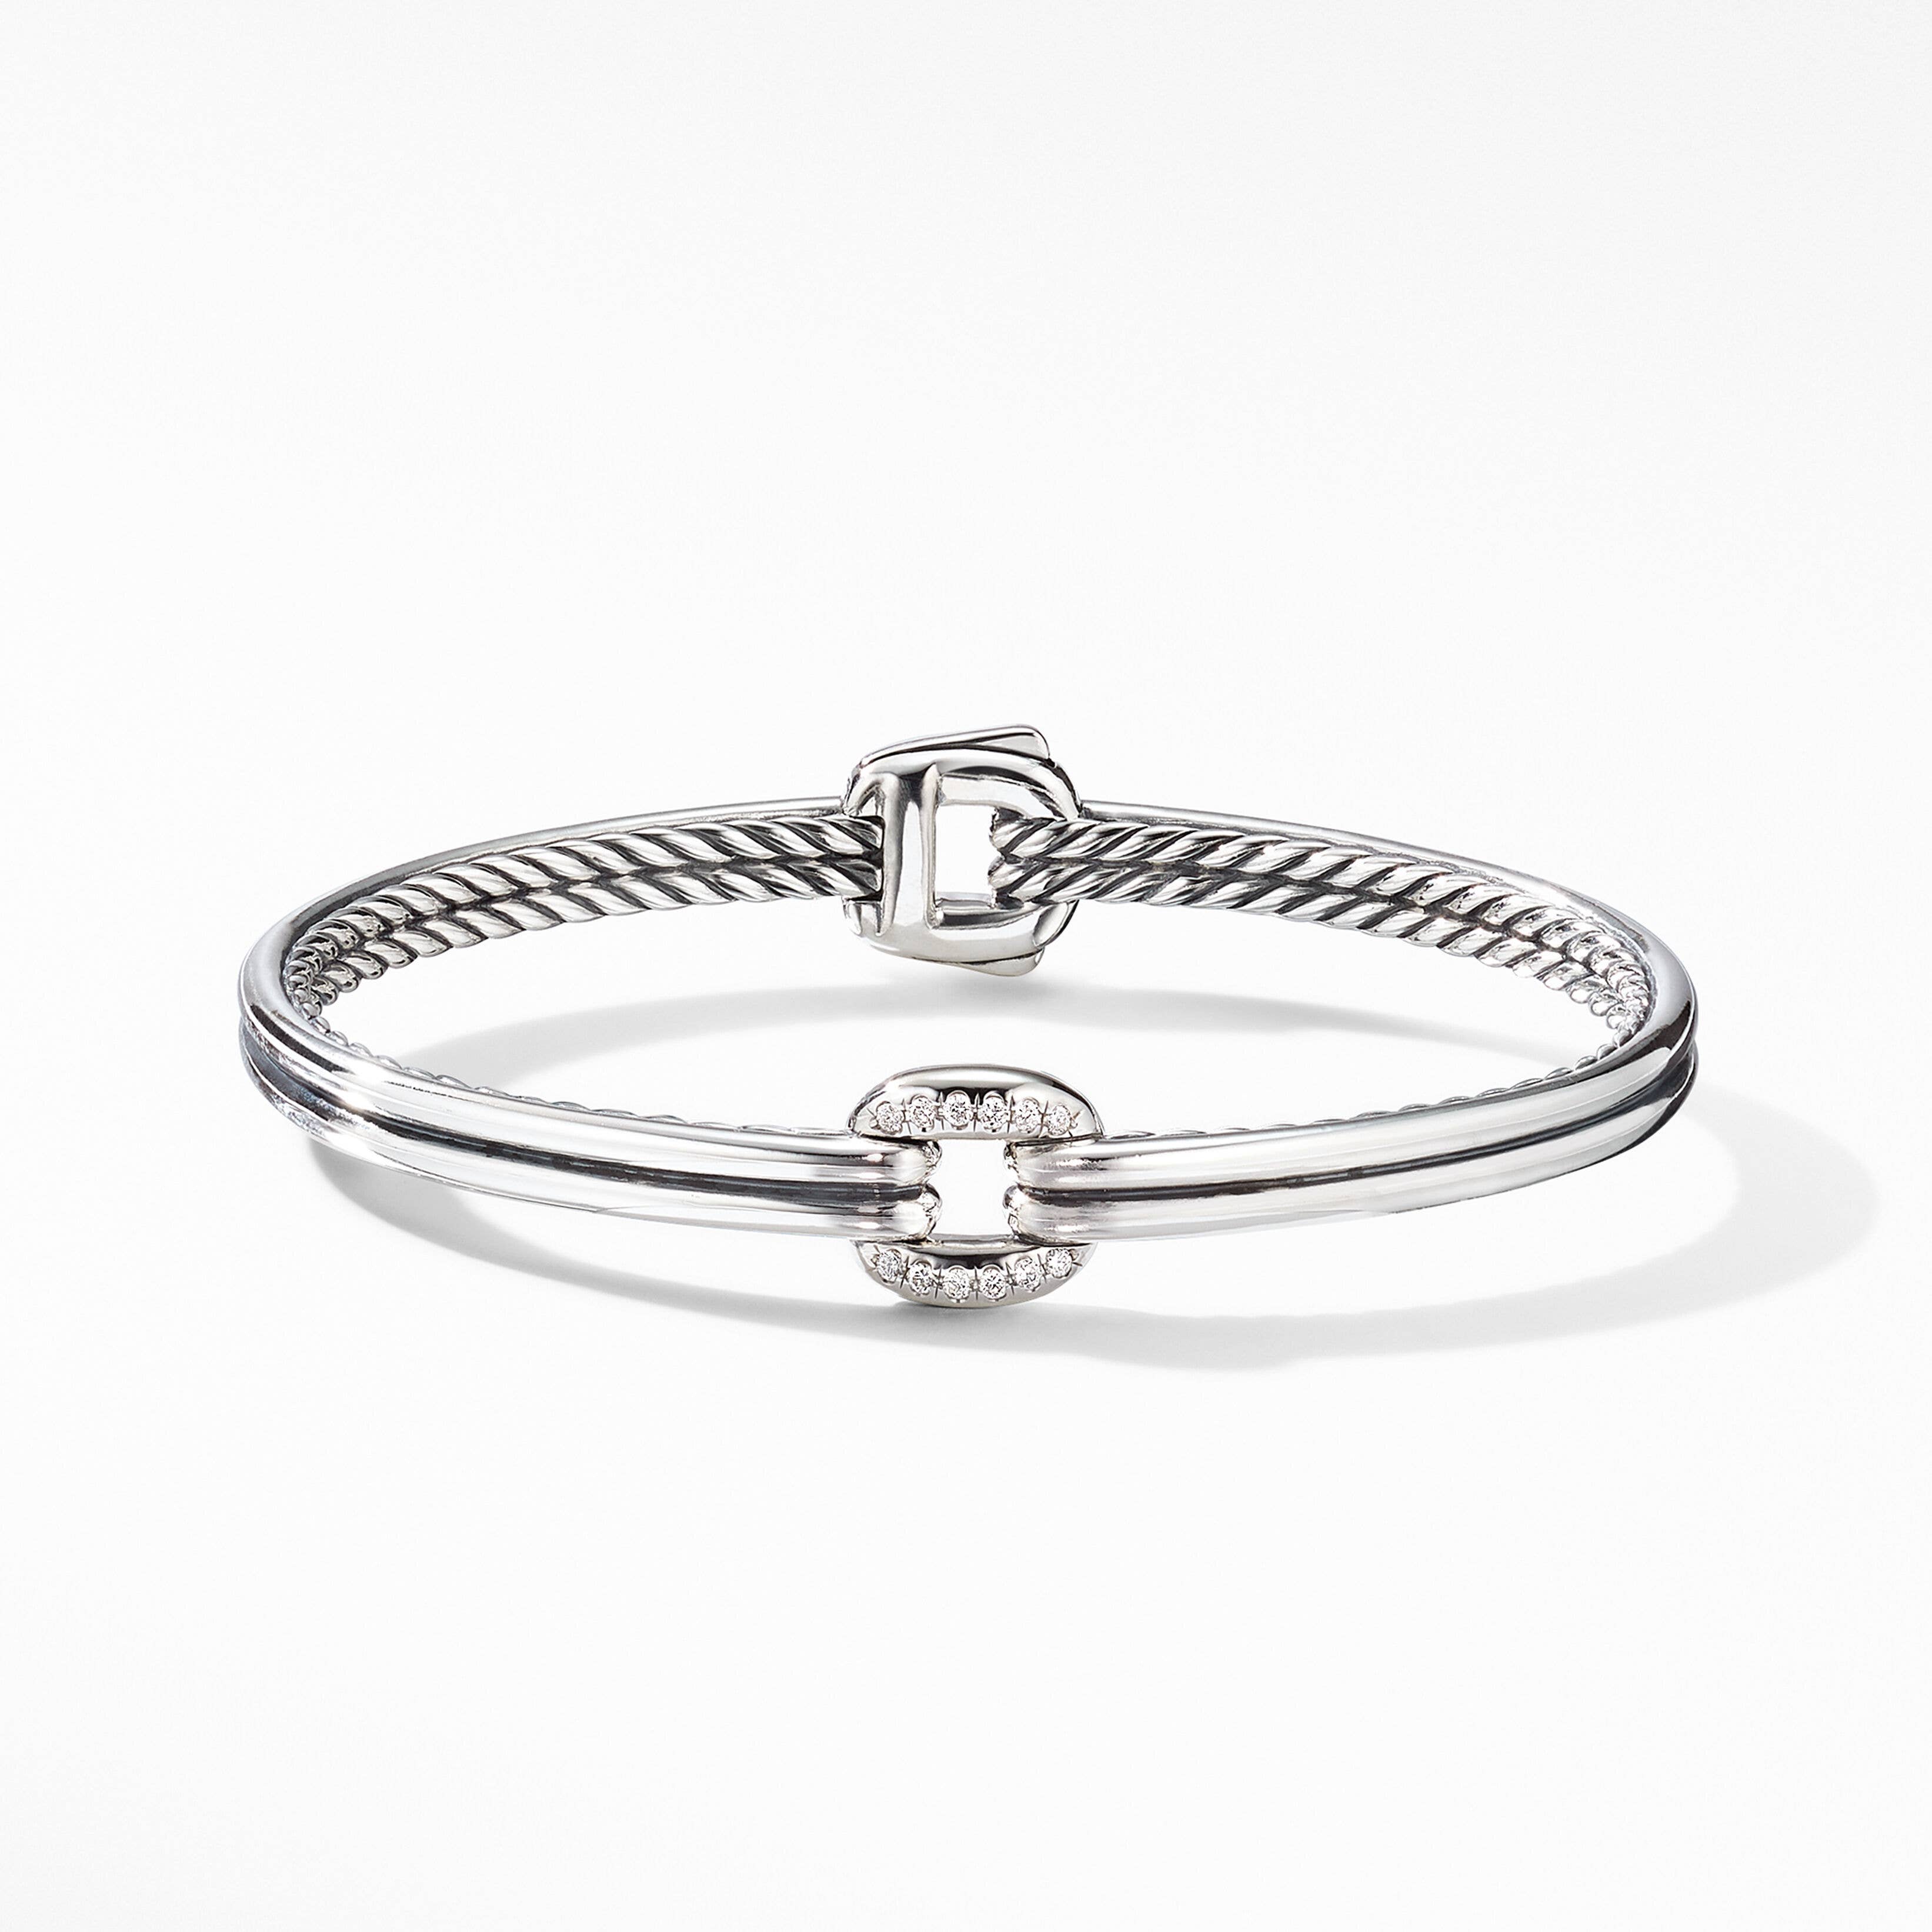 Thoroughbred Center Link Bracelet with Pavé Diamonds